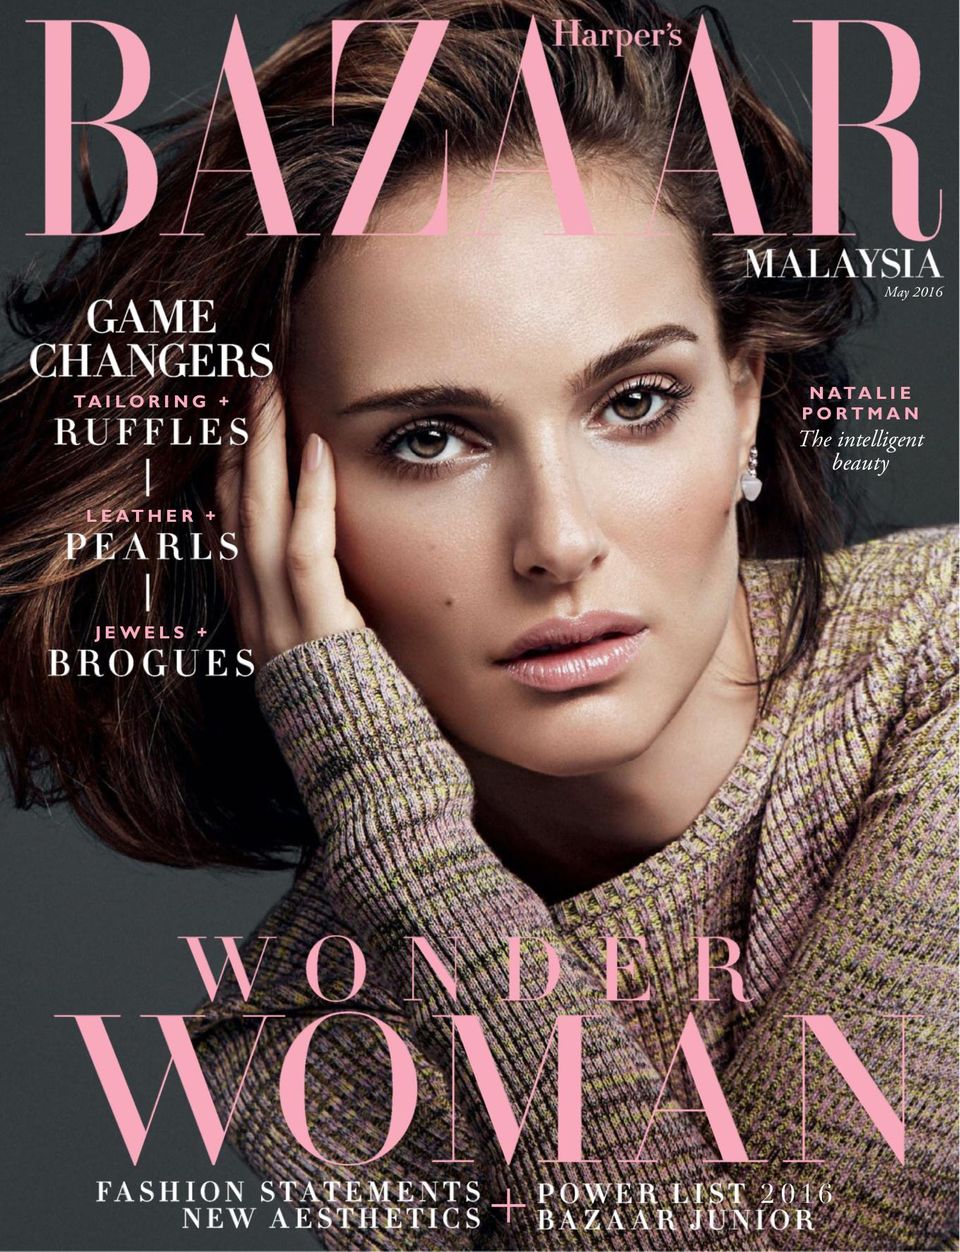 Harper's Bazaar Malaysia May 2016 (Digital) - DiscountMags.com